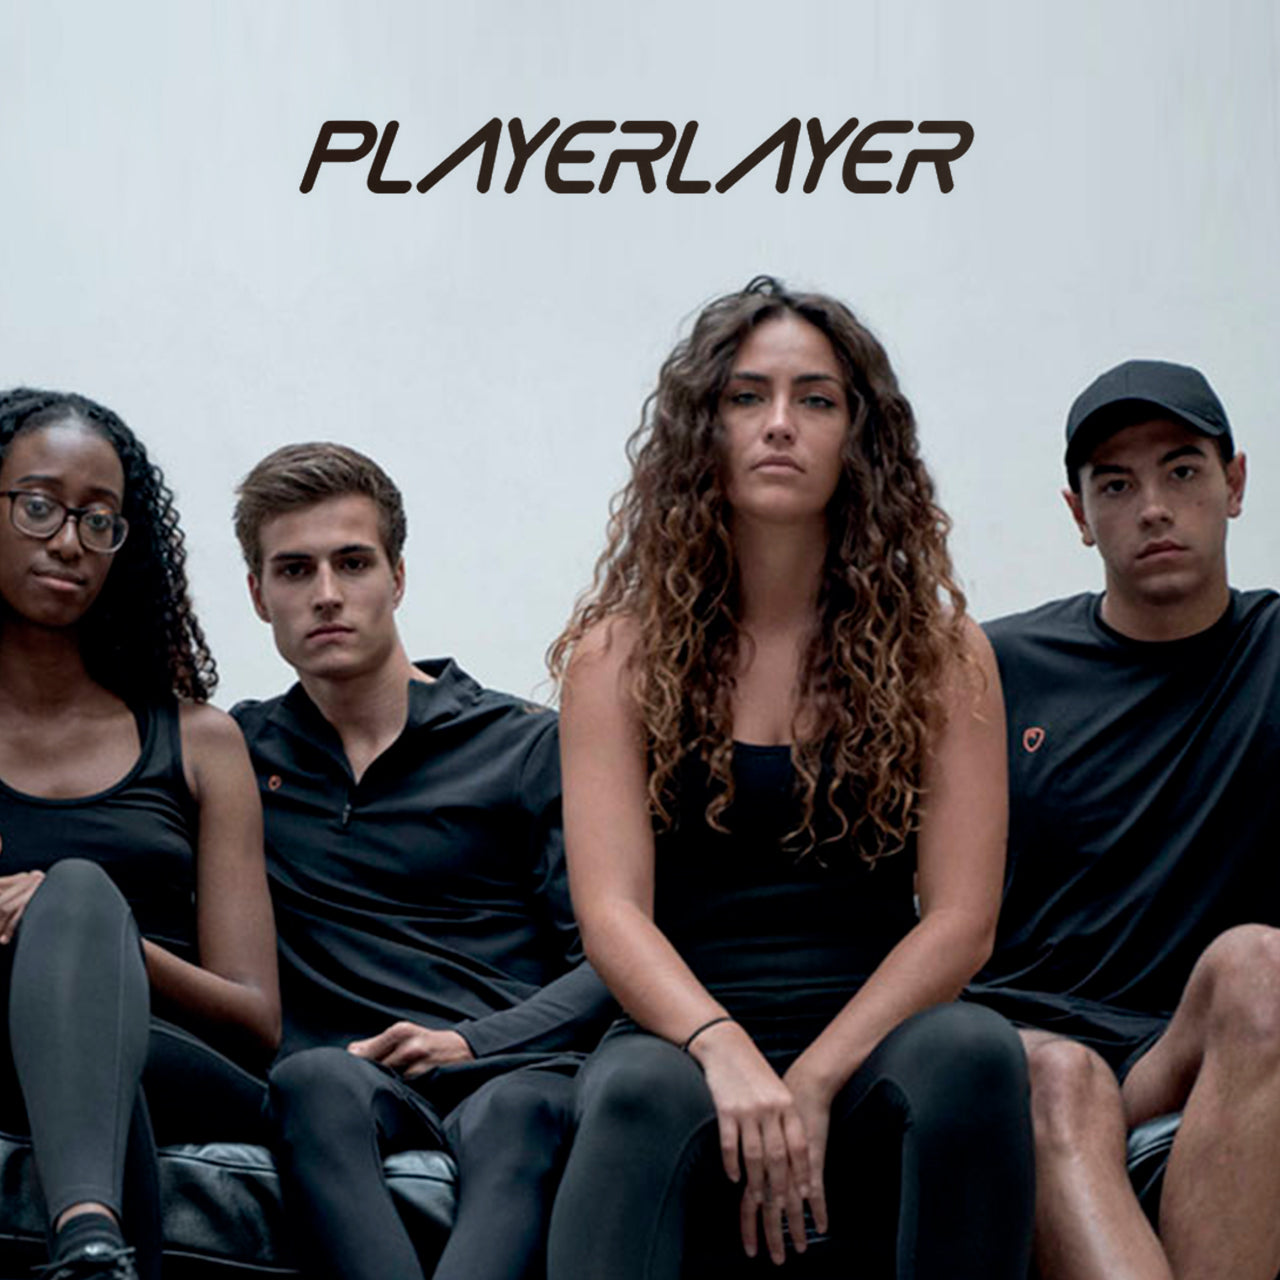 Playerlayer